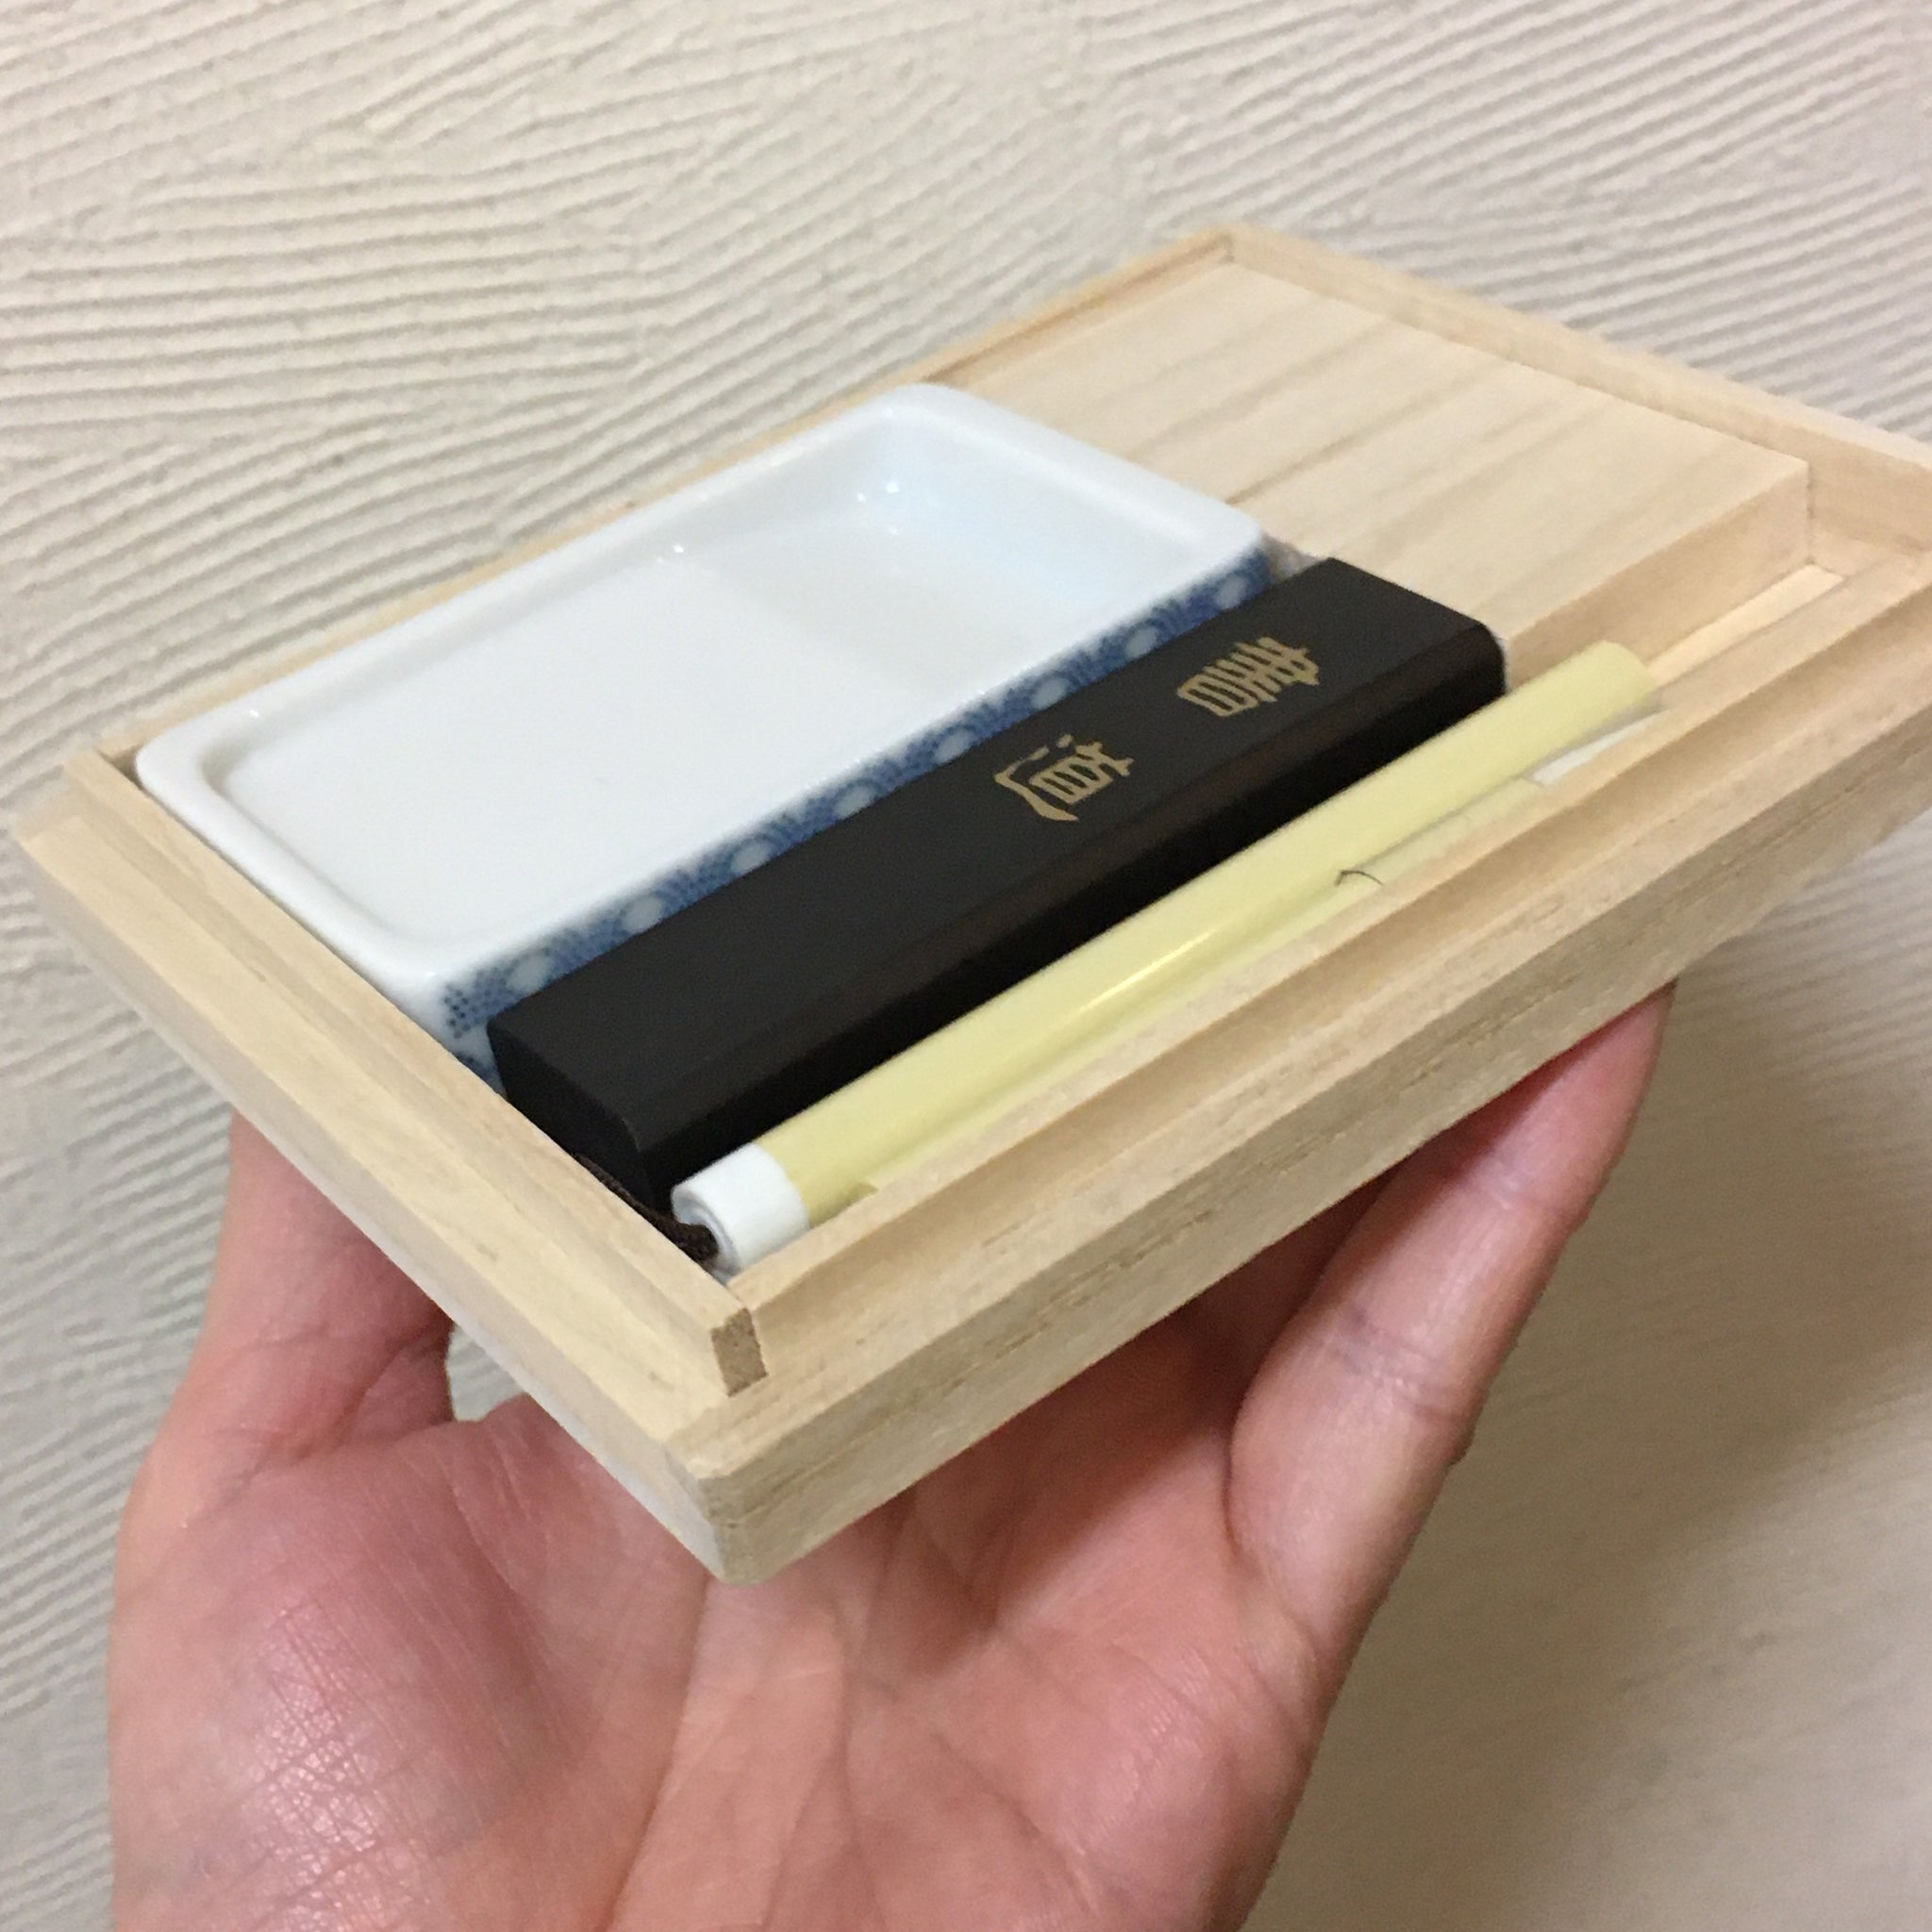 Calligraphy Set Inkstone Brush Japanese Writing Tools Silk Covered Storage  Box